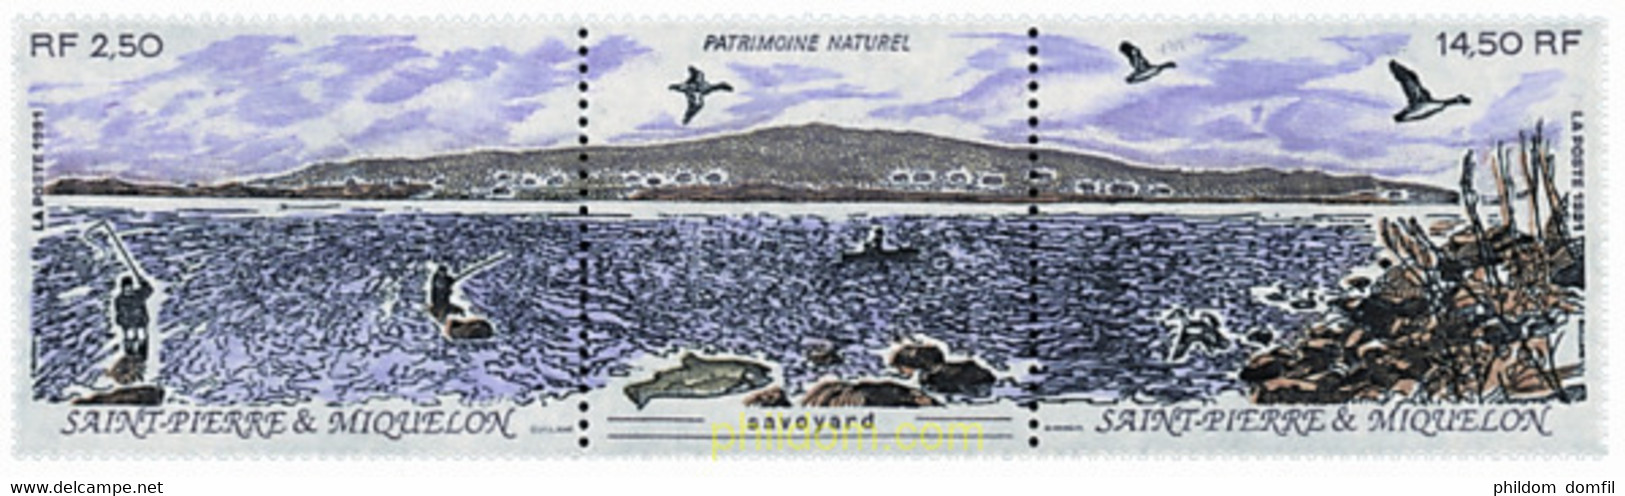 138372 MNH SAN PEDRO Y MIQUELON 1991 PATRIMONIO NATURAL - Used Stamps